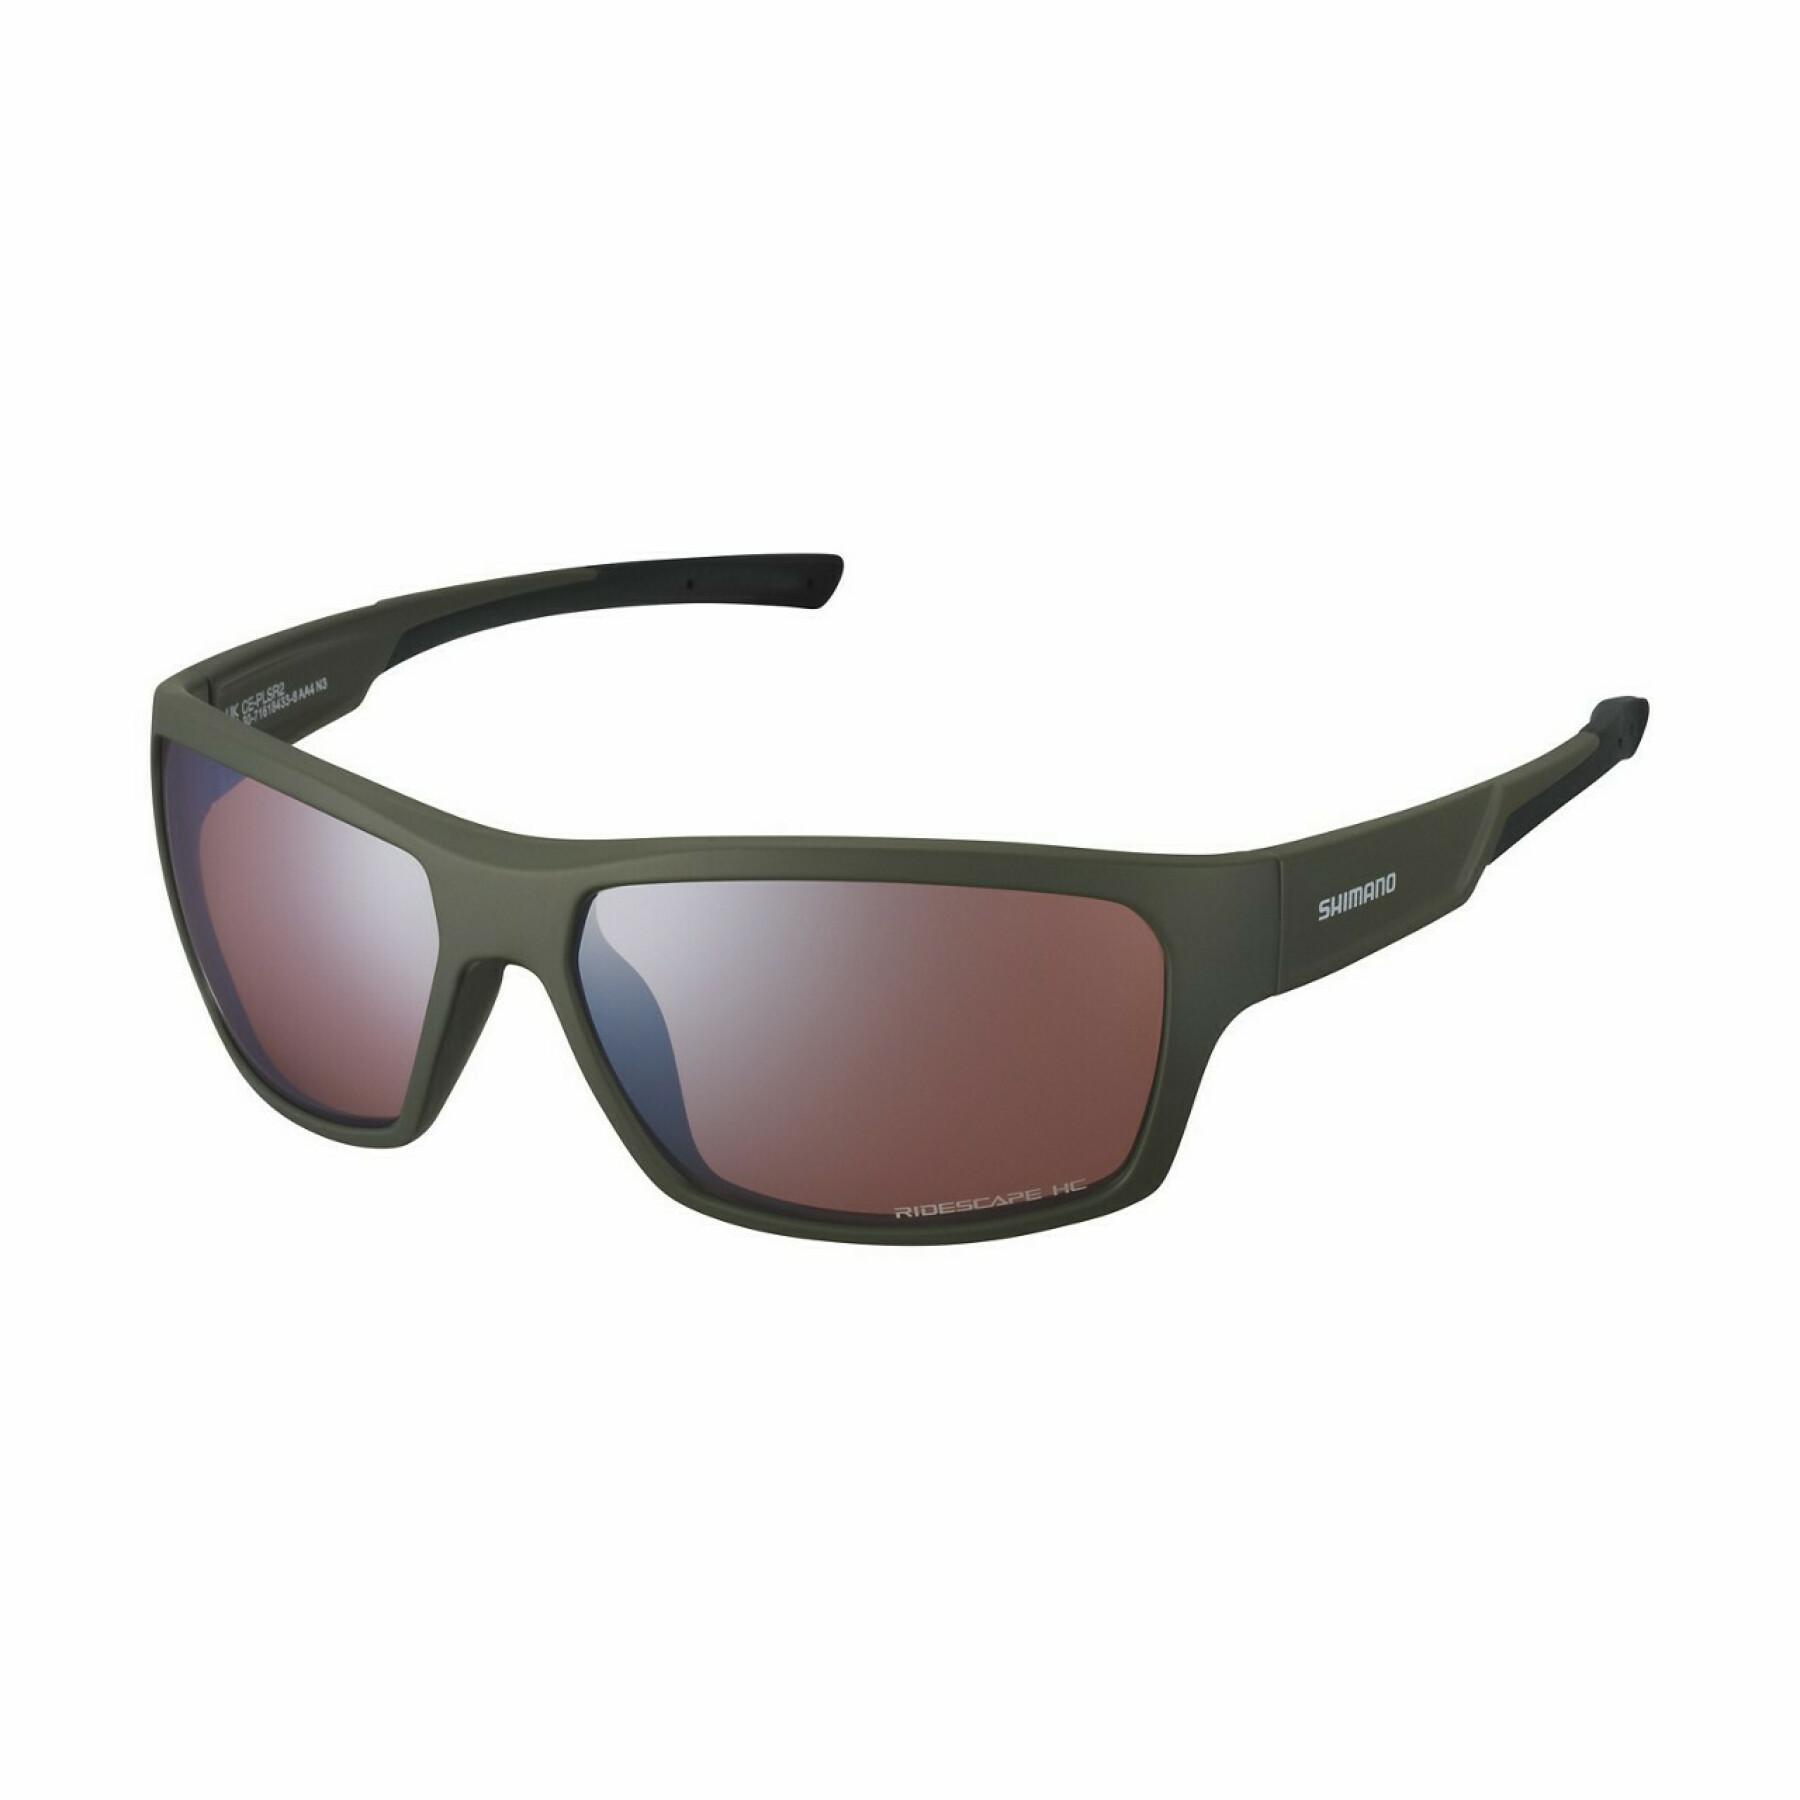 Sunglasses Shimano CE-PLSR2 Pulsar